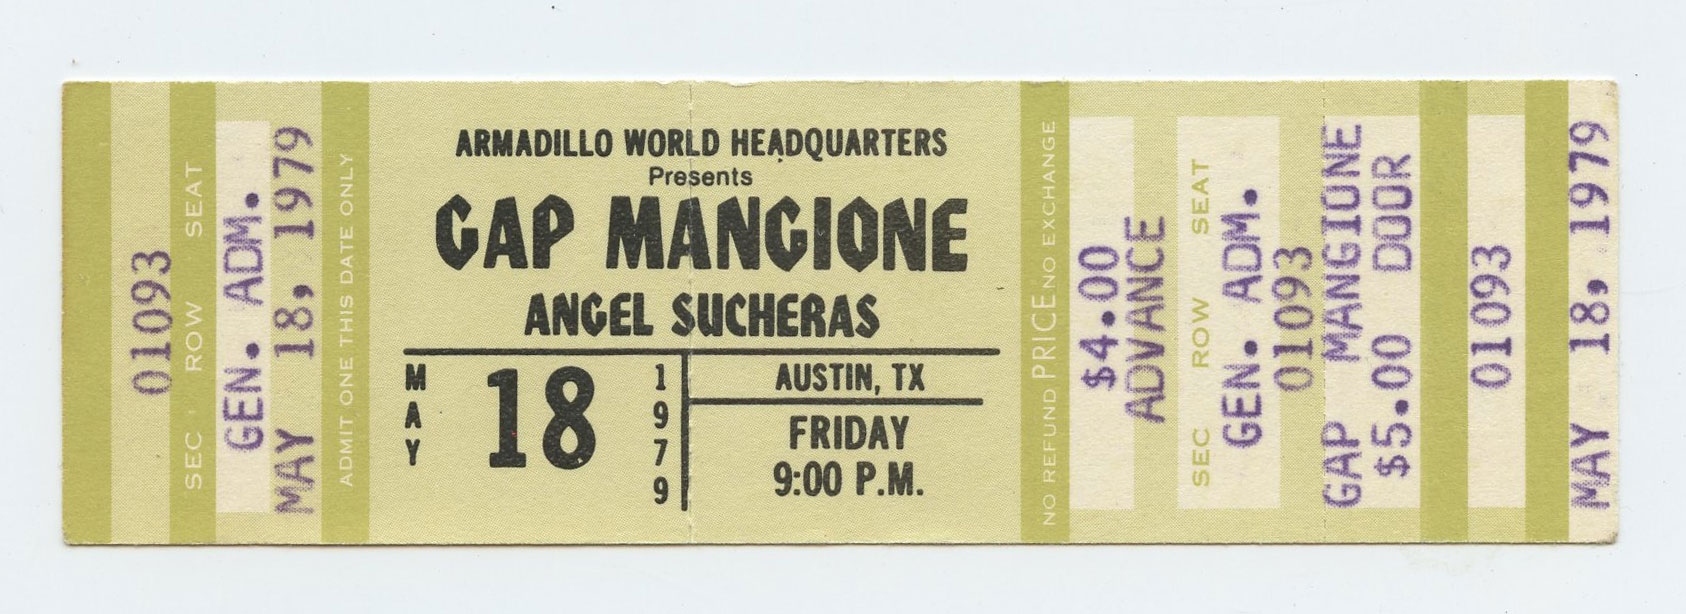 Gap Mangione Vintage Ticket 1979 May 18 Austin TX 